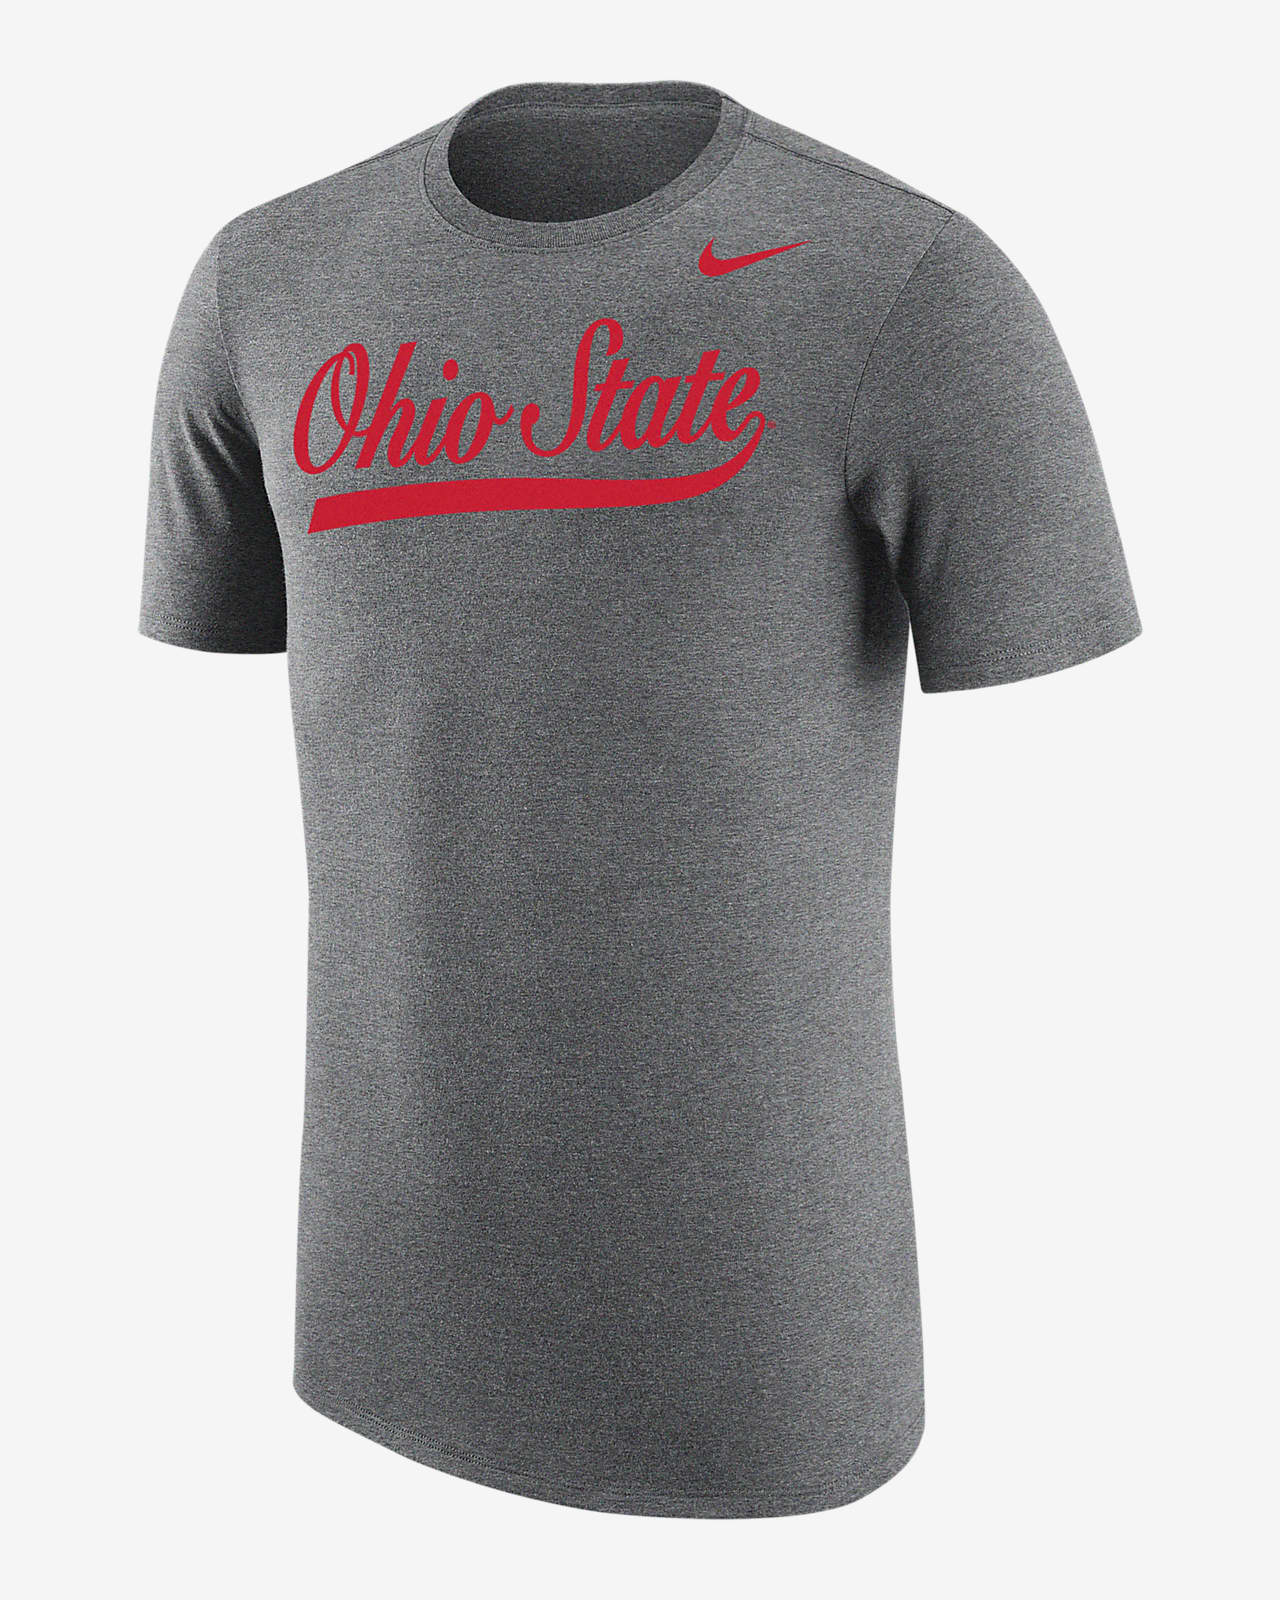 Playera universitaria Nike para hombre Ohio State